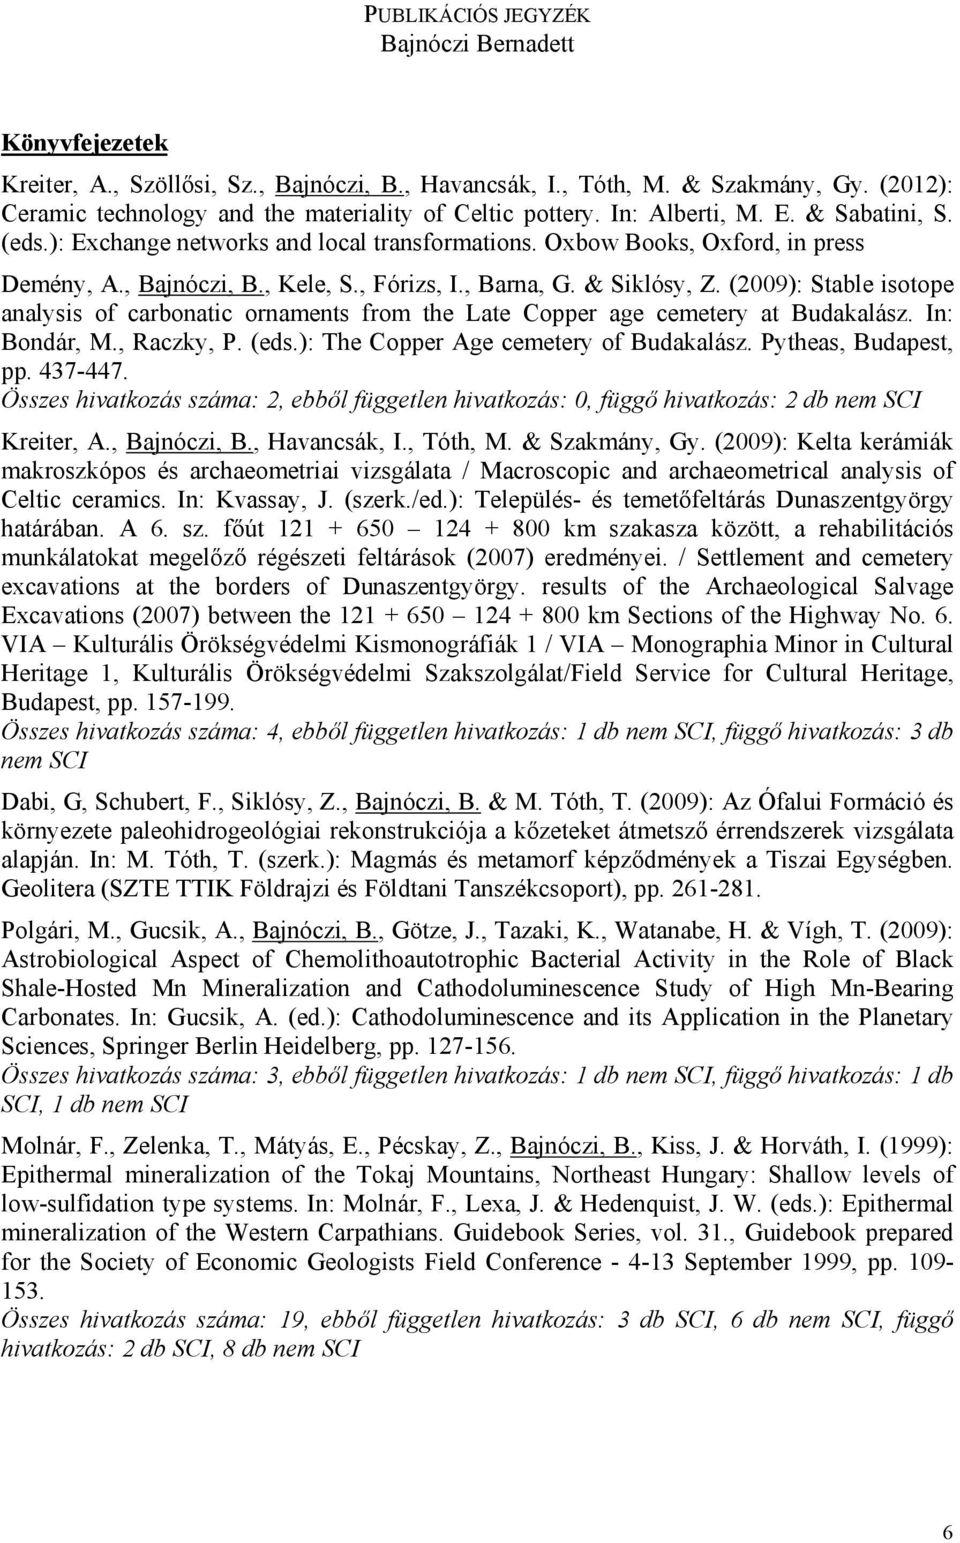 , Bajnóczi, B., Kele, S., Fórizs, I., Barna, G. & Siklósy, Z. (2009): Stable isotope analysis of carbonatic ornaments from the Late Copper age cemetery at Budakalász. In: Bondár, M., Raczky, P. (eds.